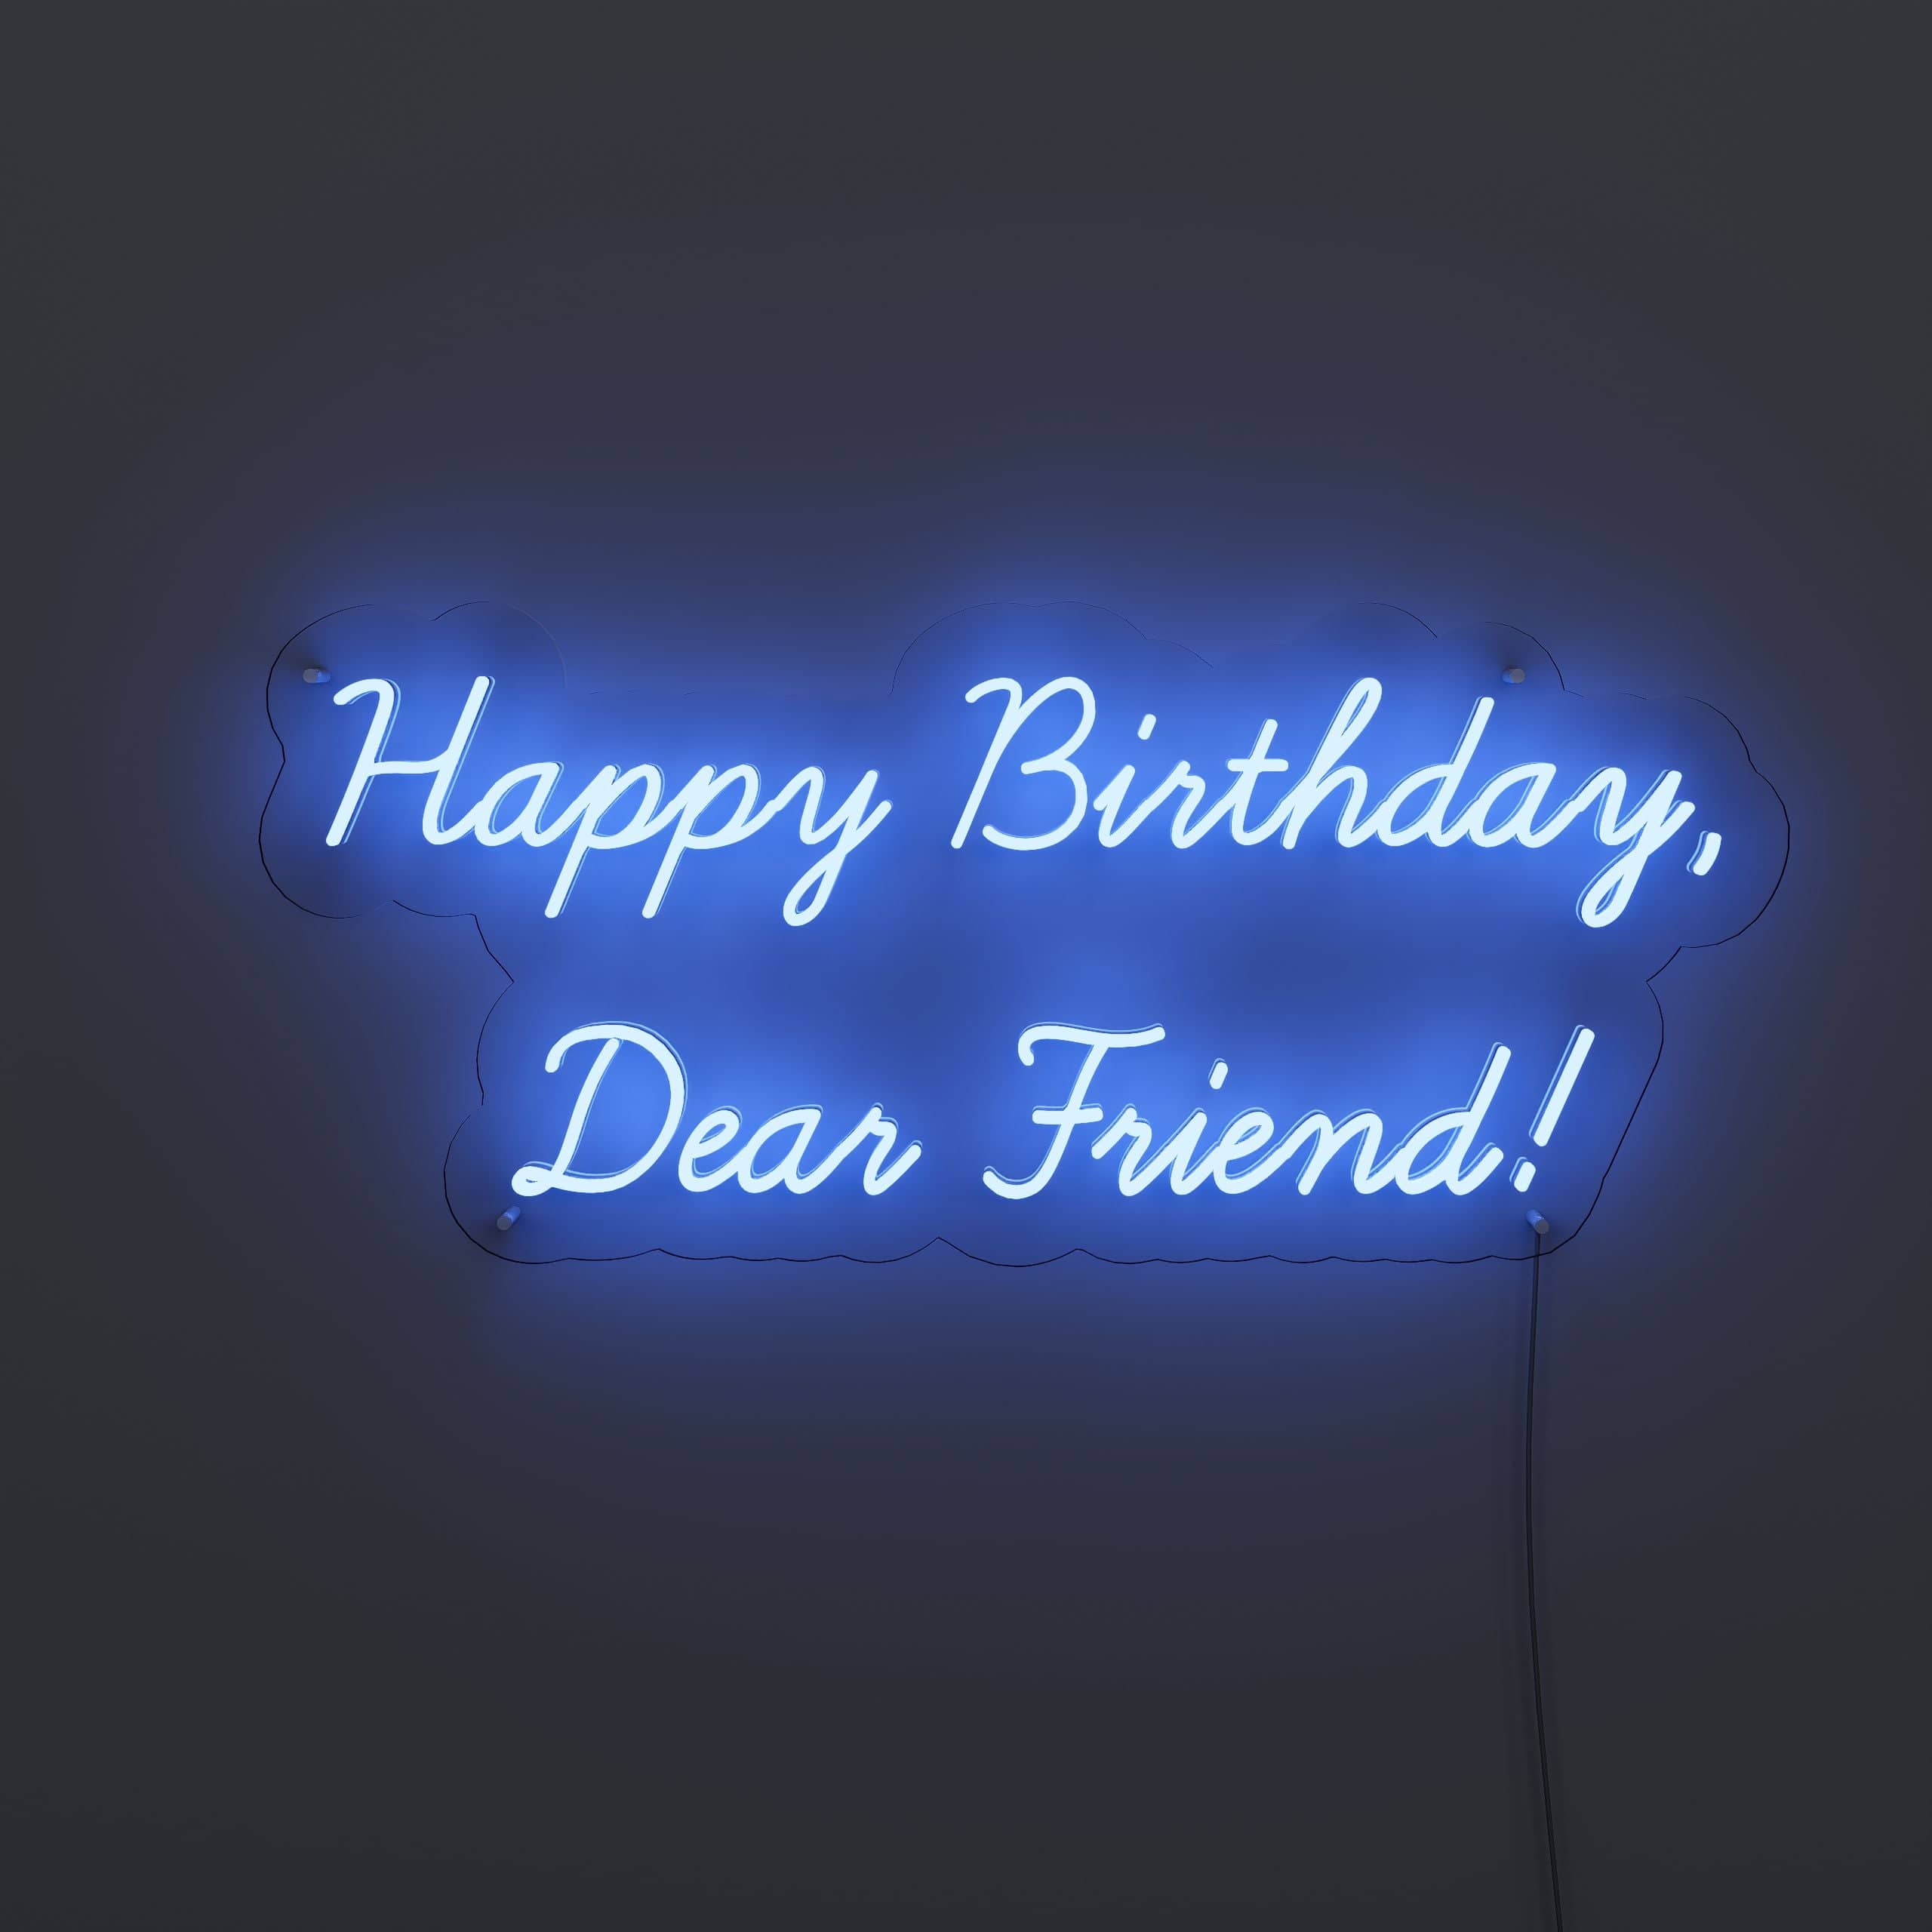 wishing-a-fantastic-birthday-to-a-true-friend!-neon-sign-lite